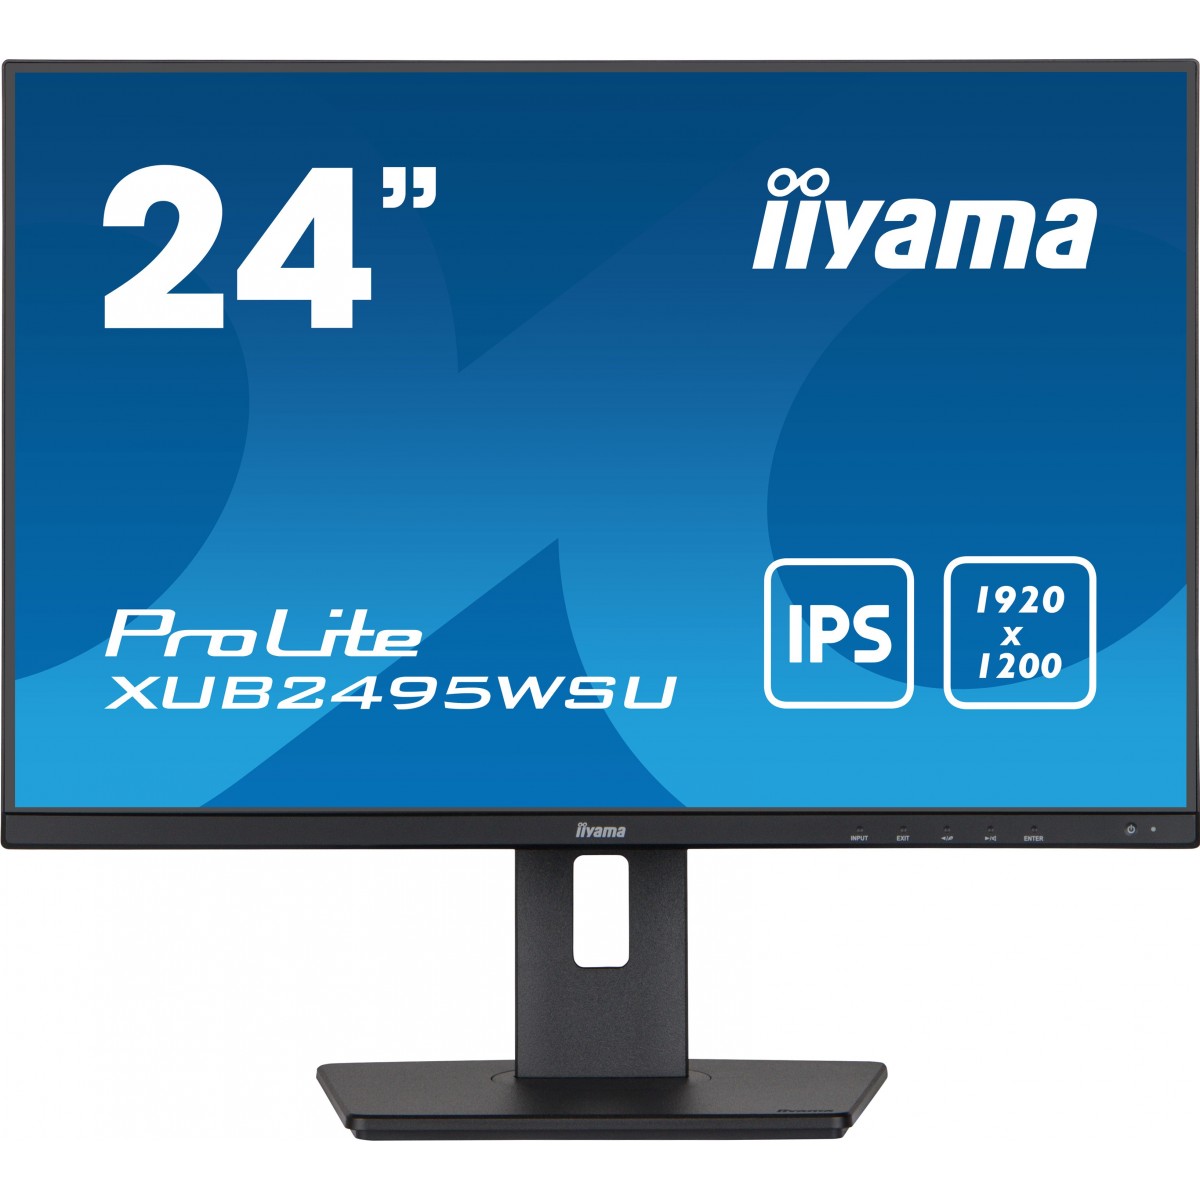 Iiyama IPS 1H 1DP 1A 1920x1200 - Flat Screen - 1,000:1